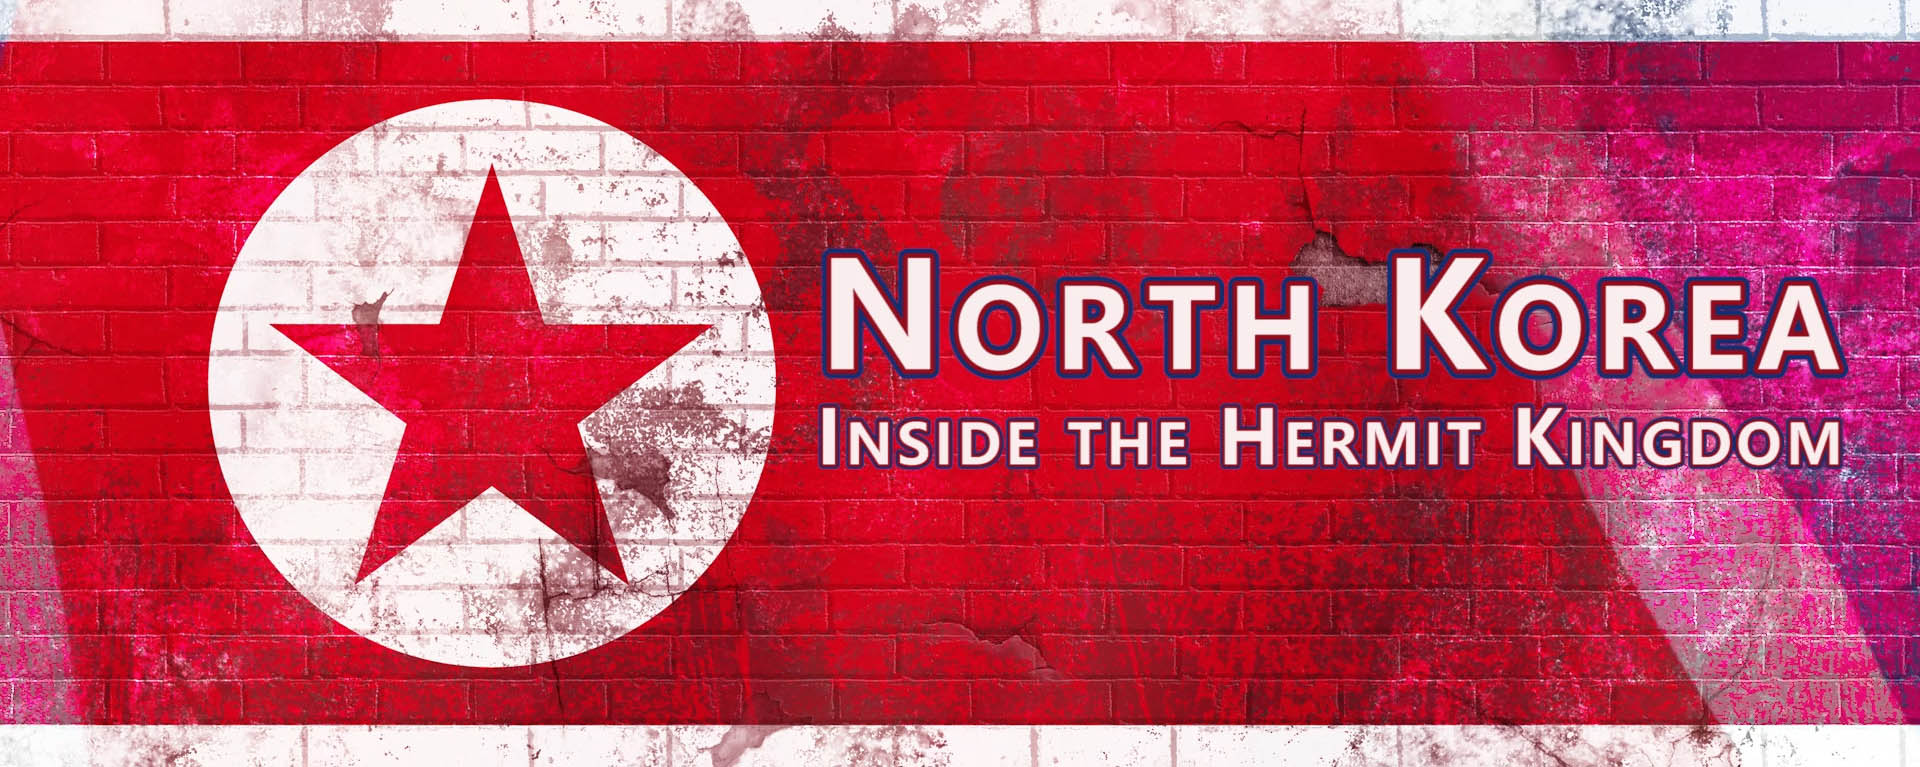 North Korea: Inside the Hermit Kingdom documentary graphic title 